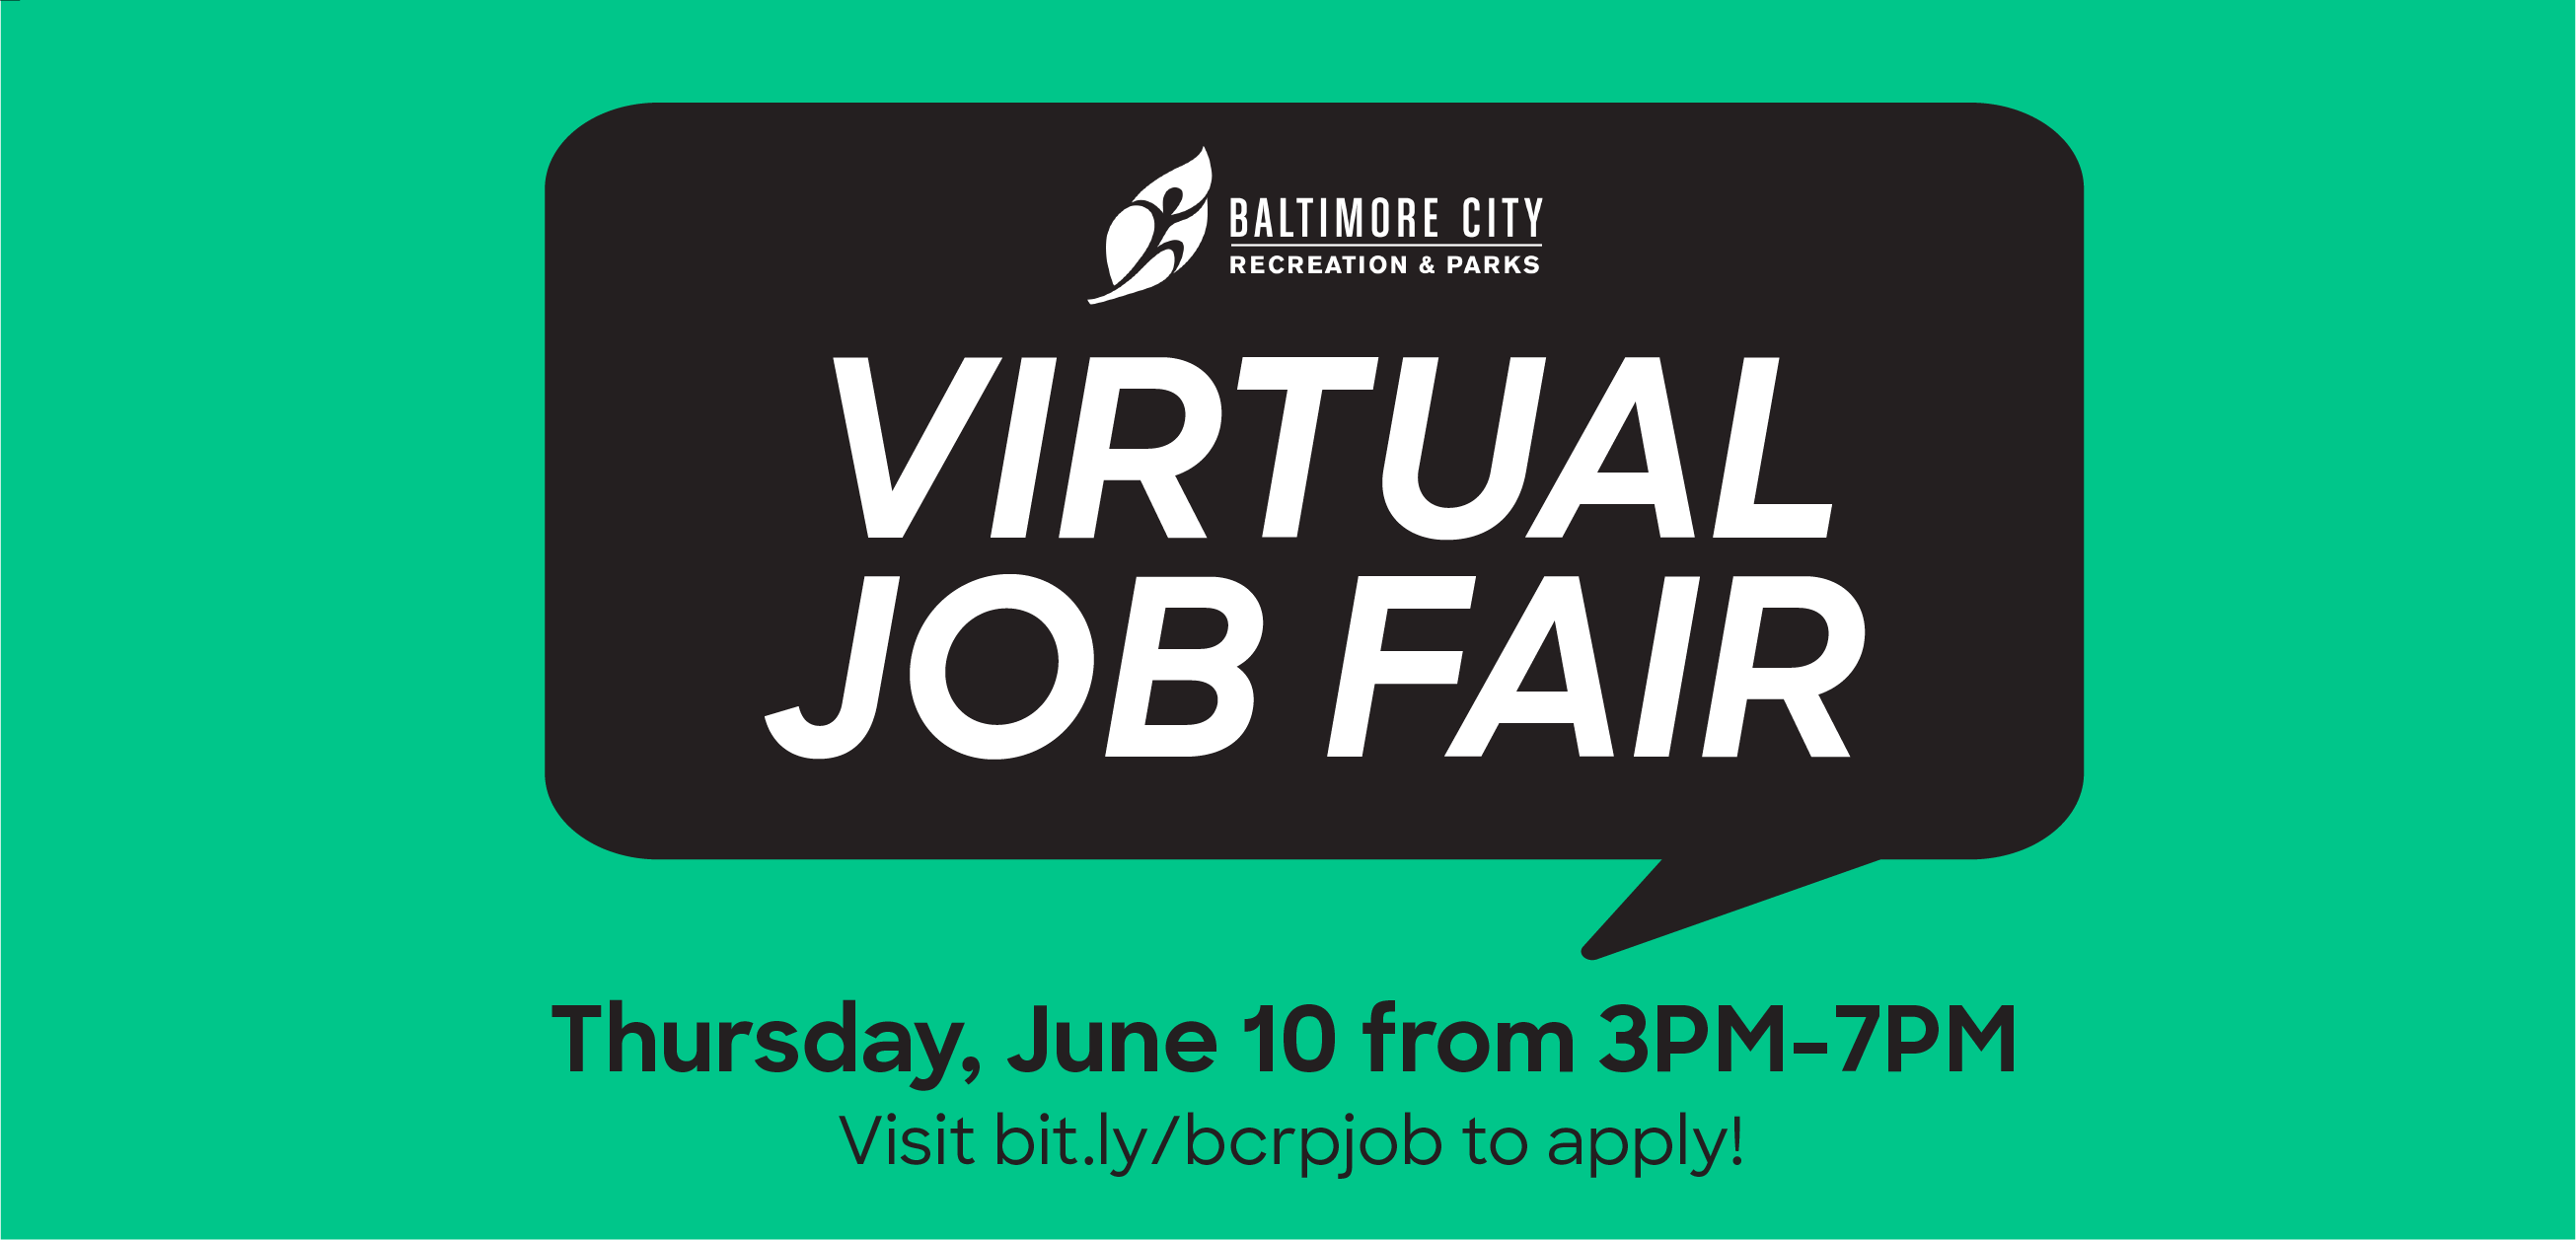 Virtual Job Fair. Thursday June 10 from 3PM-7pM.